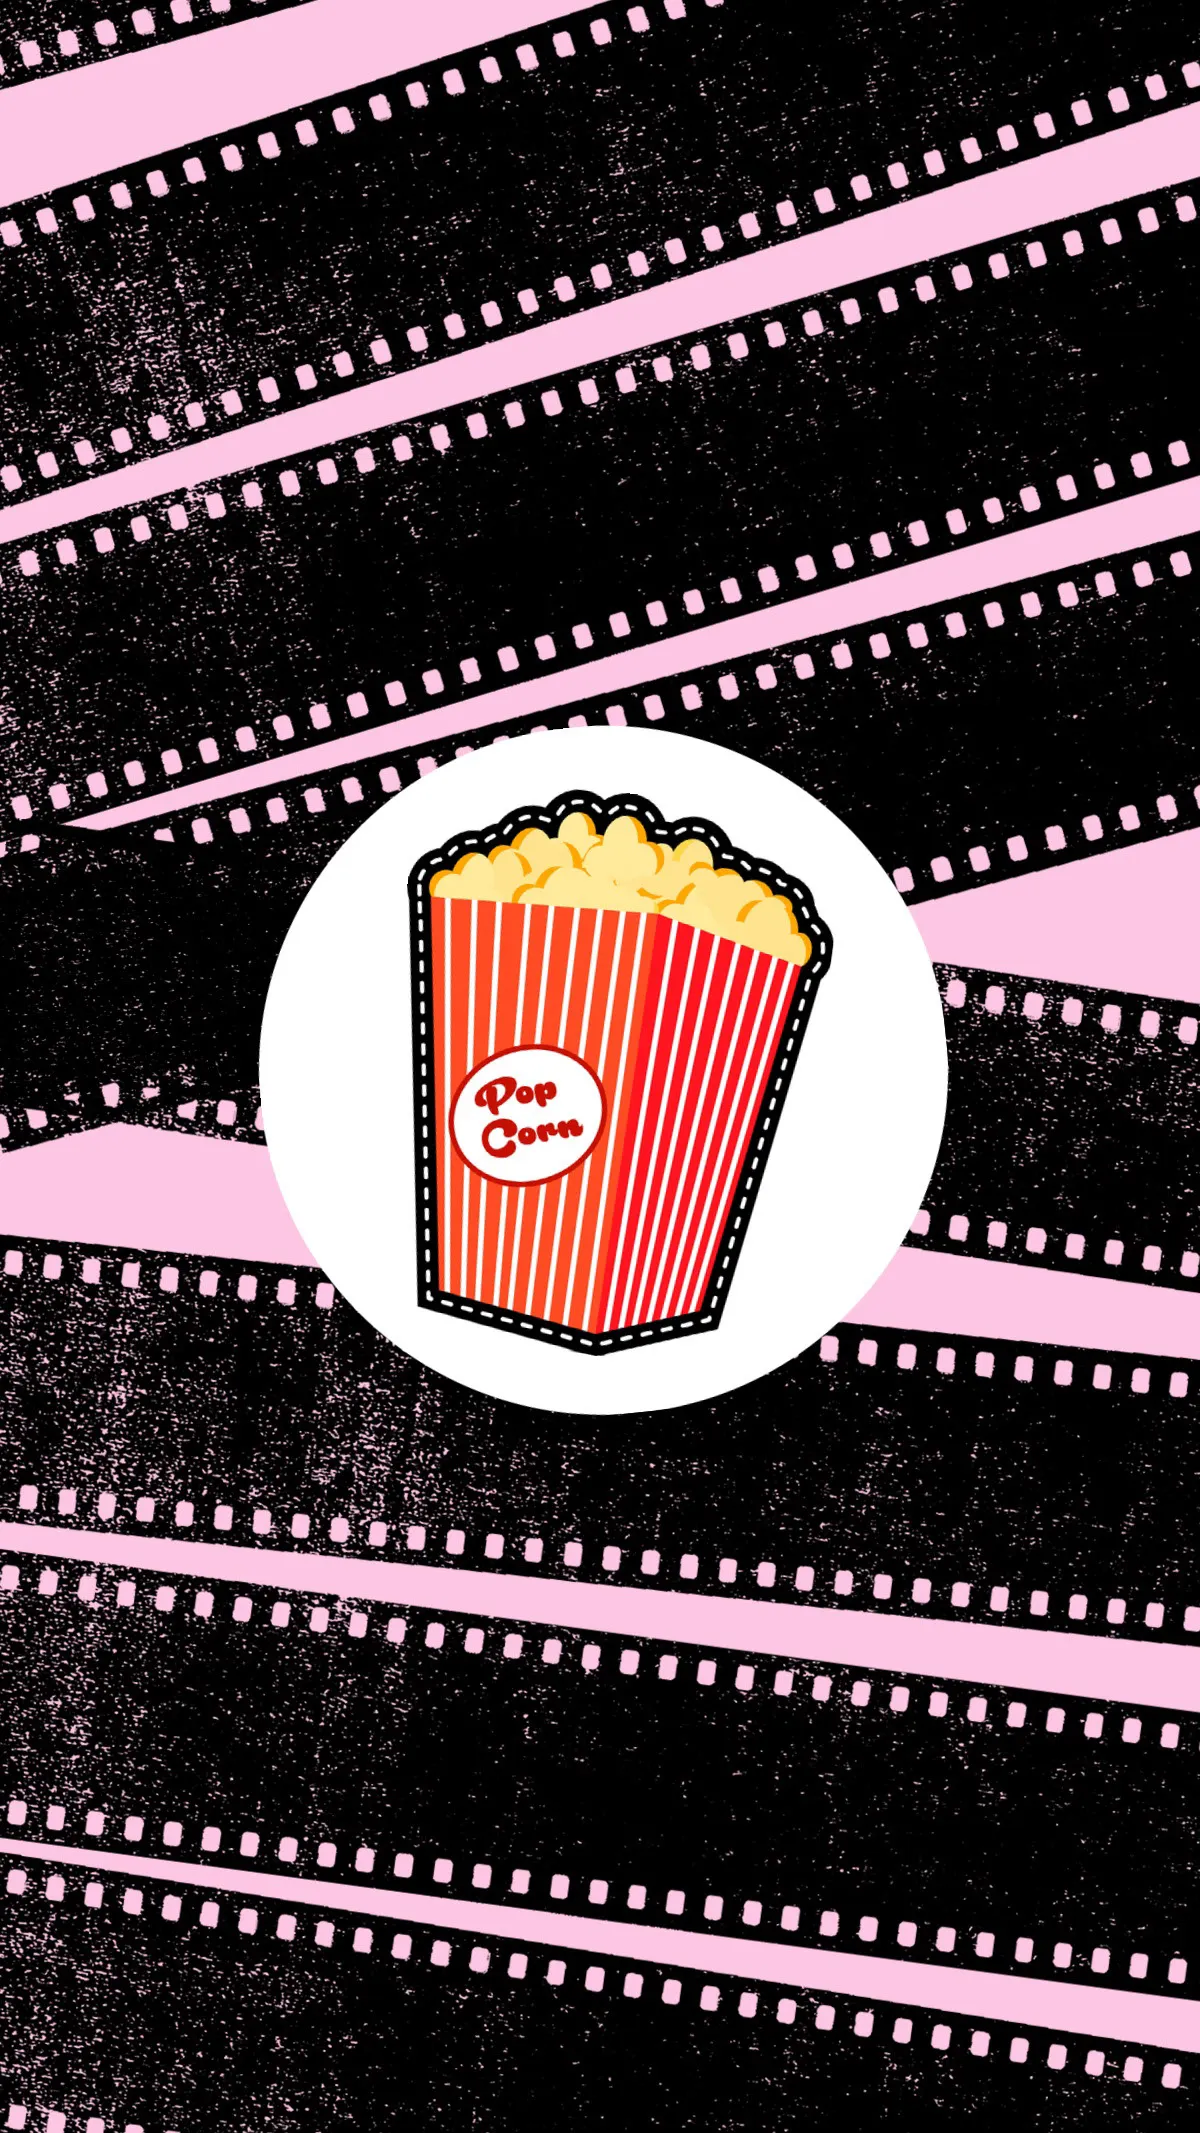 Film Roll and Popcorn Illustration Instagram Story